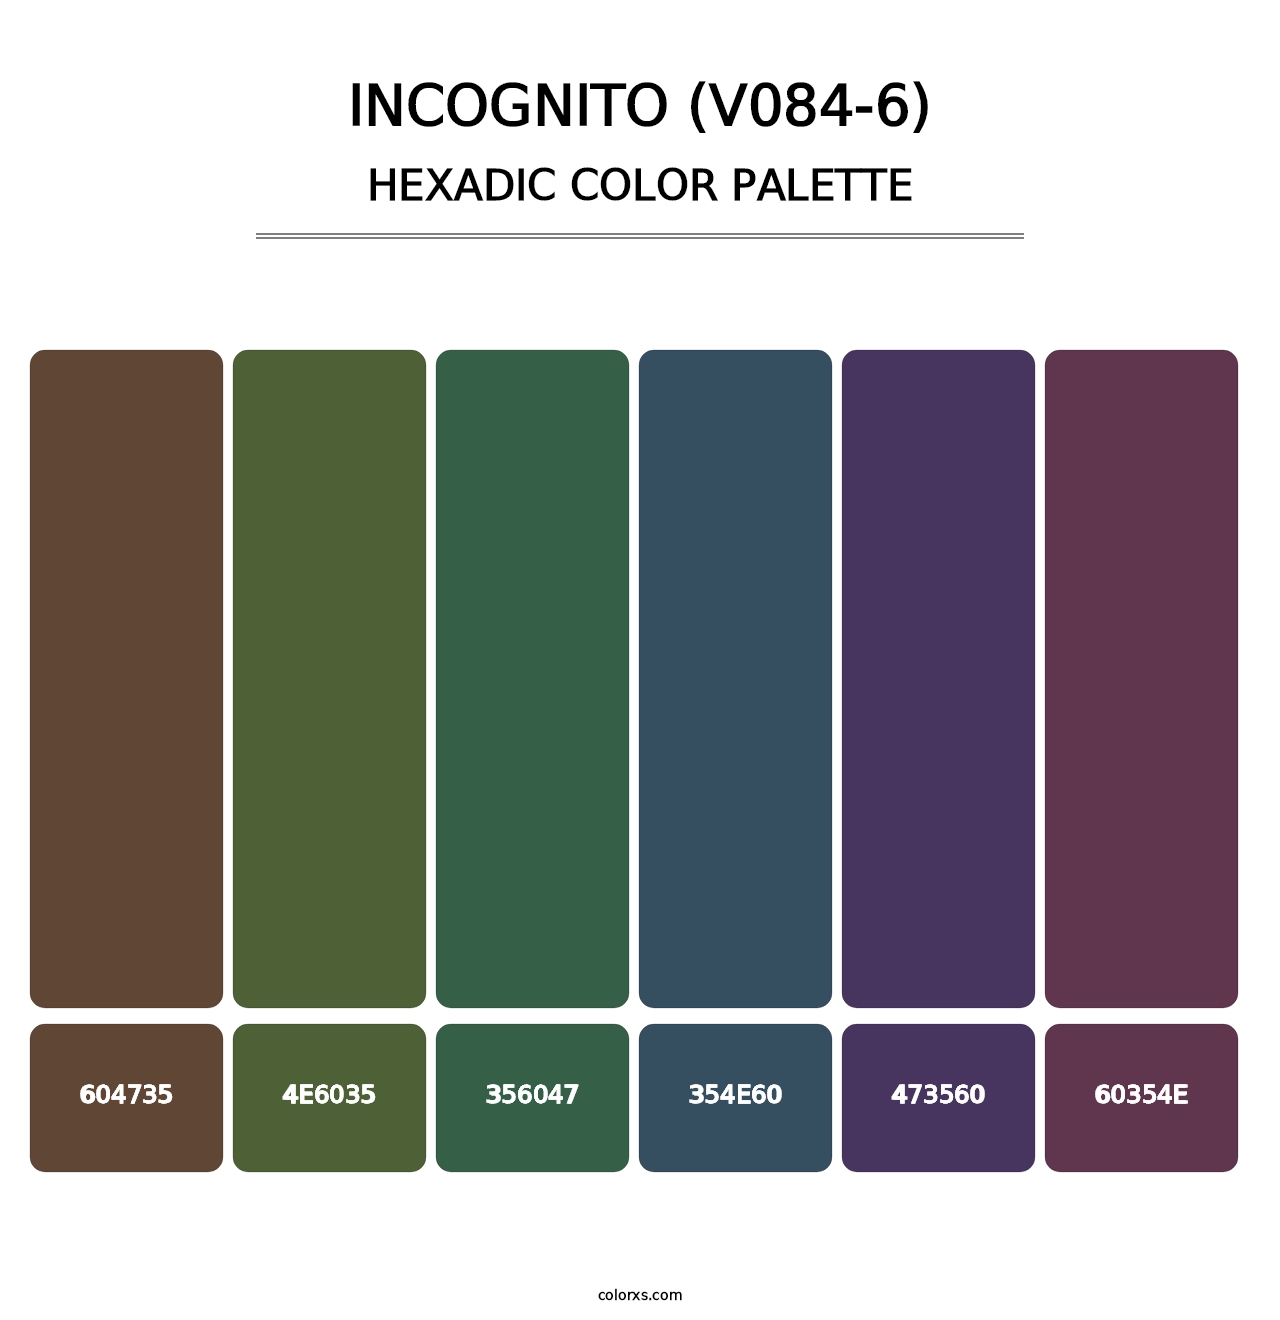 Incognito (V084-6) - Hexadic Color Palette